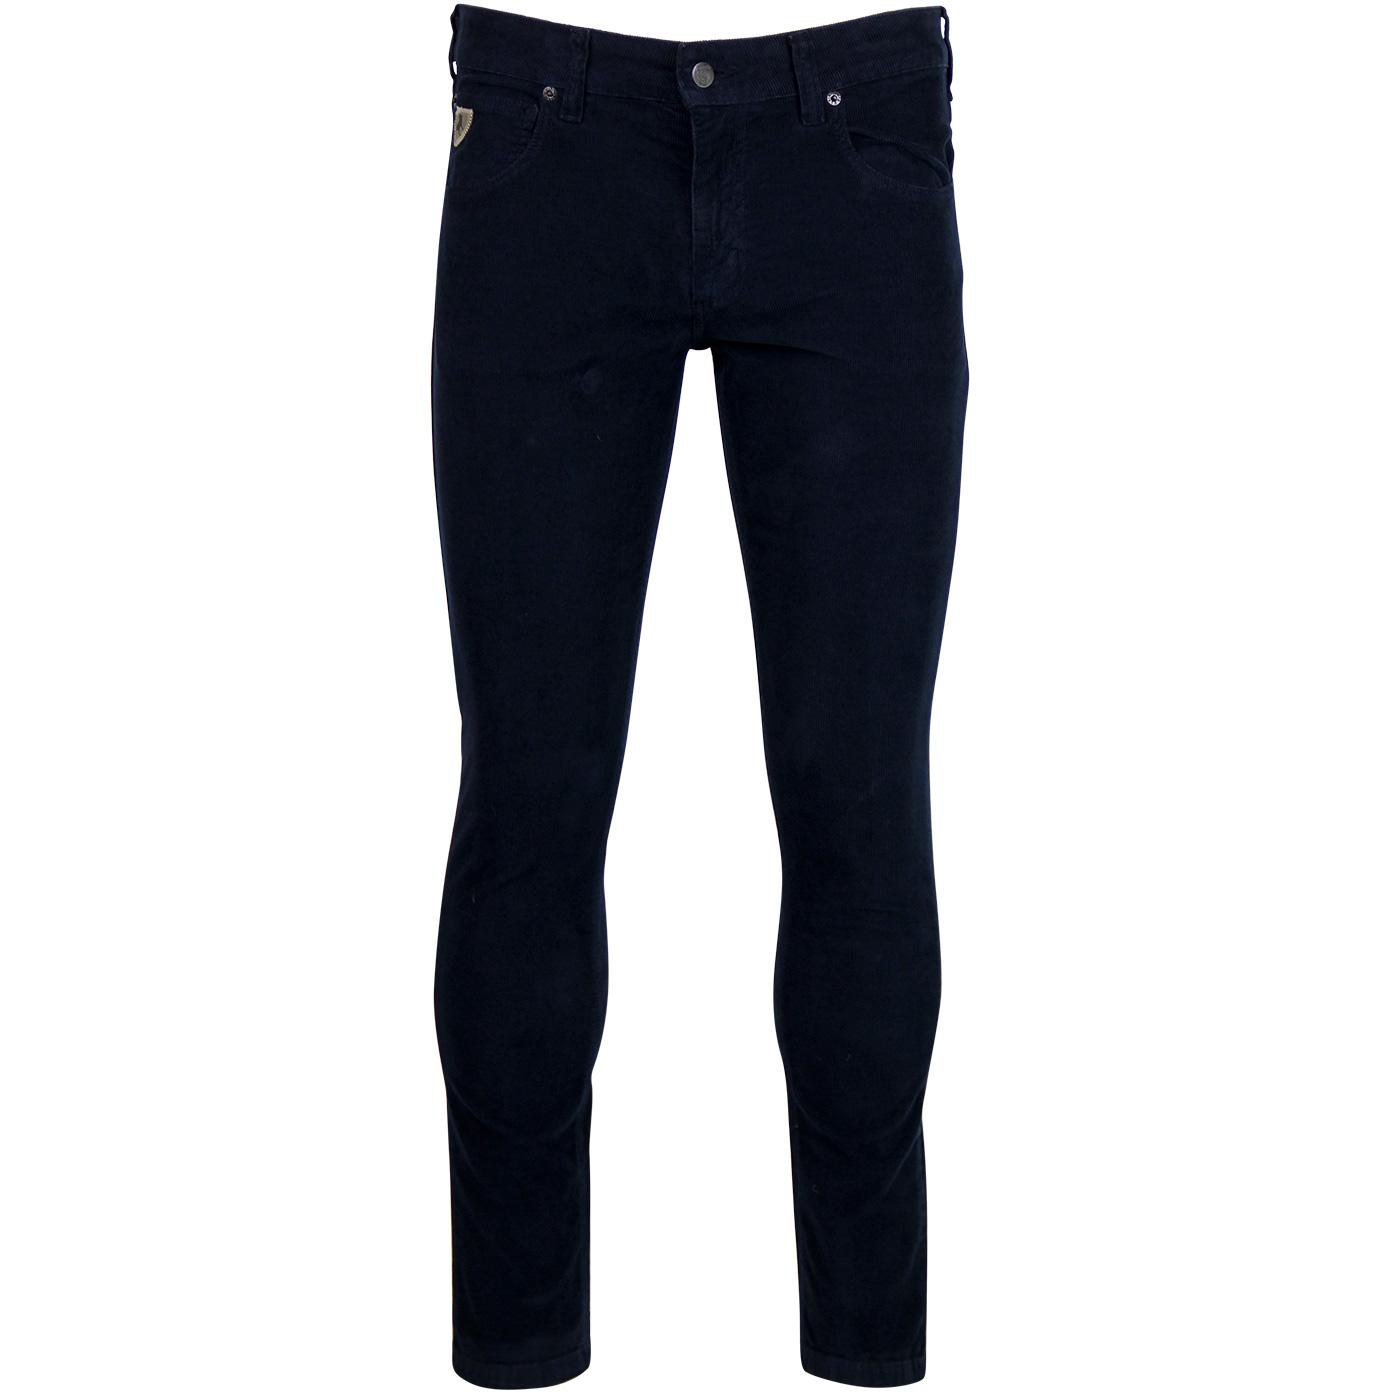 LOIS 'Sky' Retro Mod Skinny Thin Cord Jeans in Navy